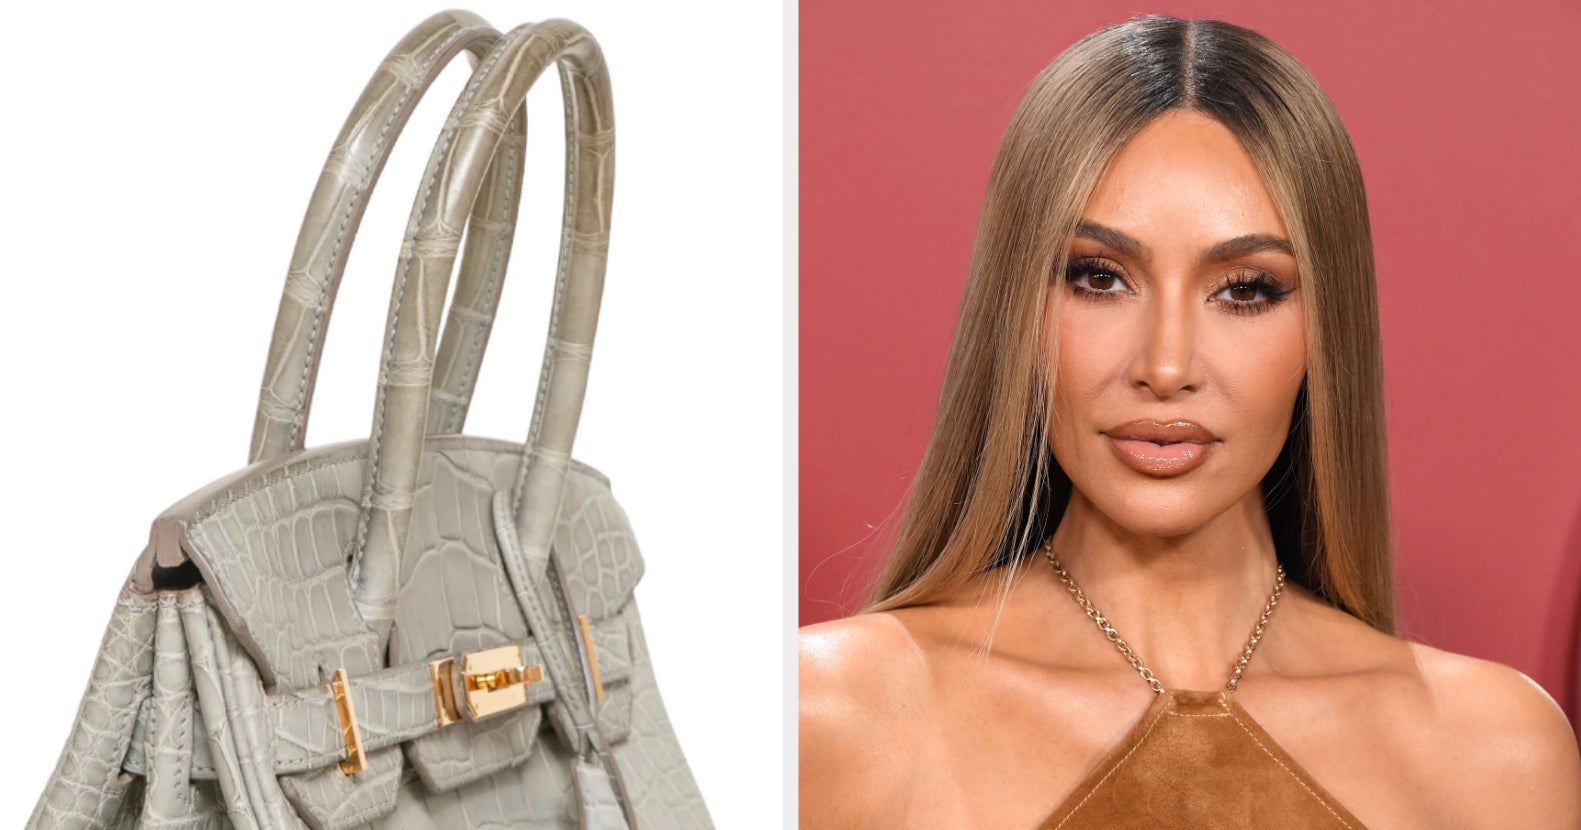 Kim Kardashian trades her Birkin for an Erewhon grocery bag at